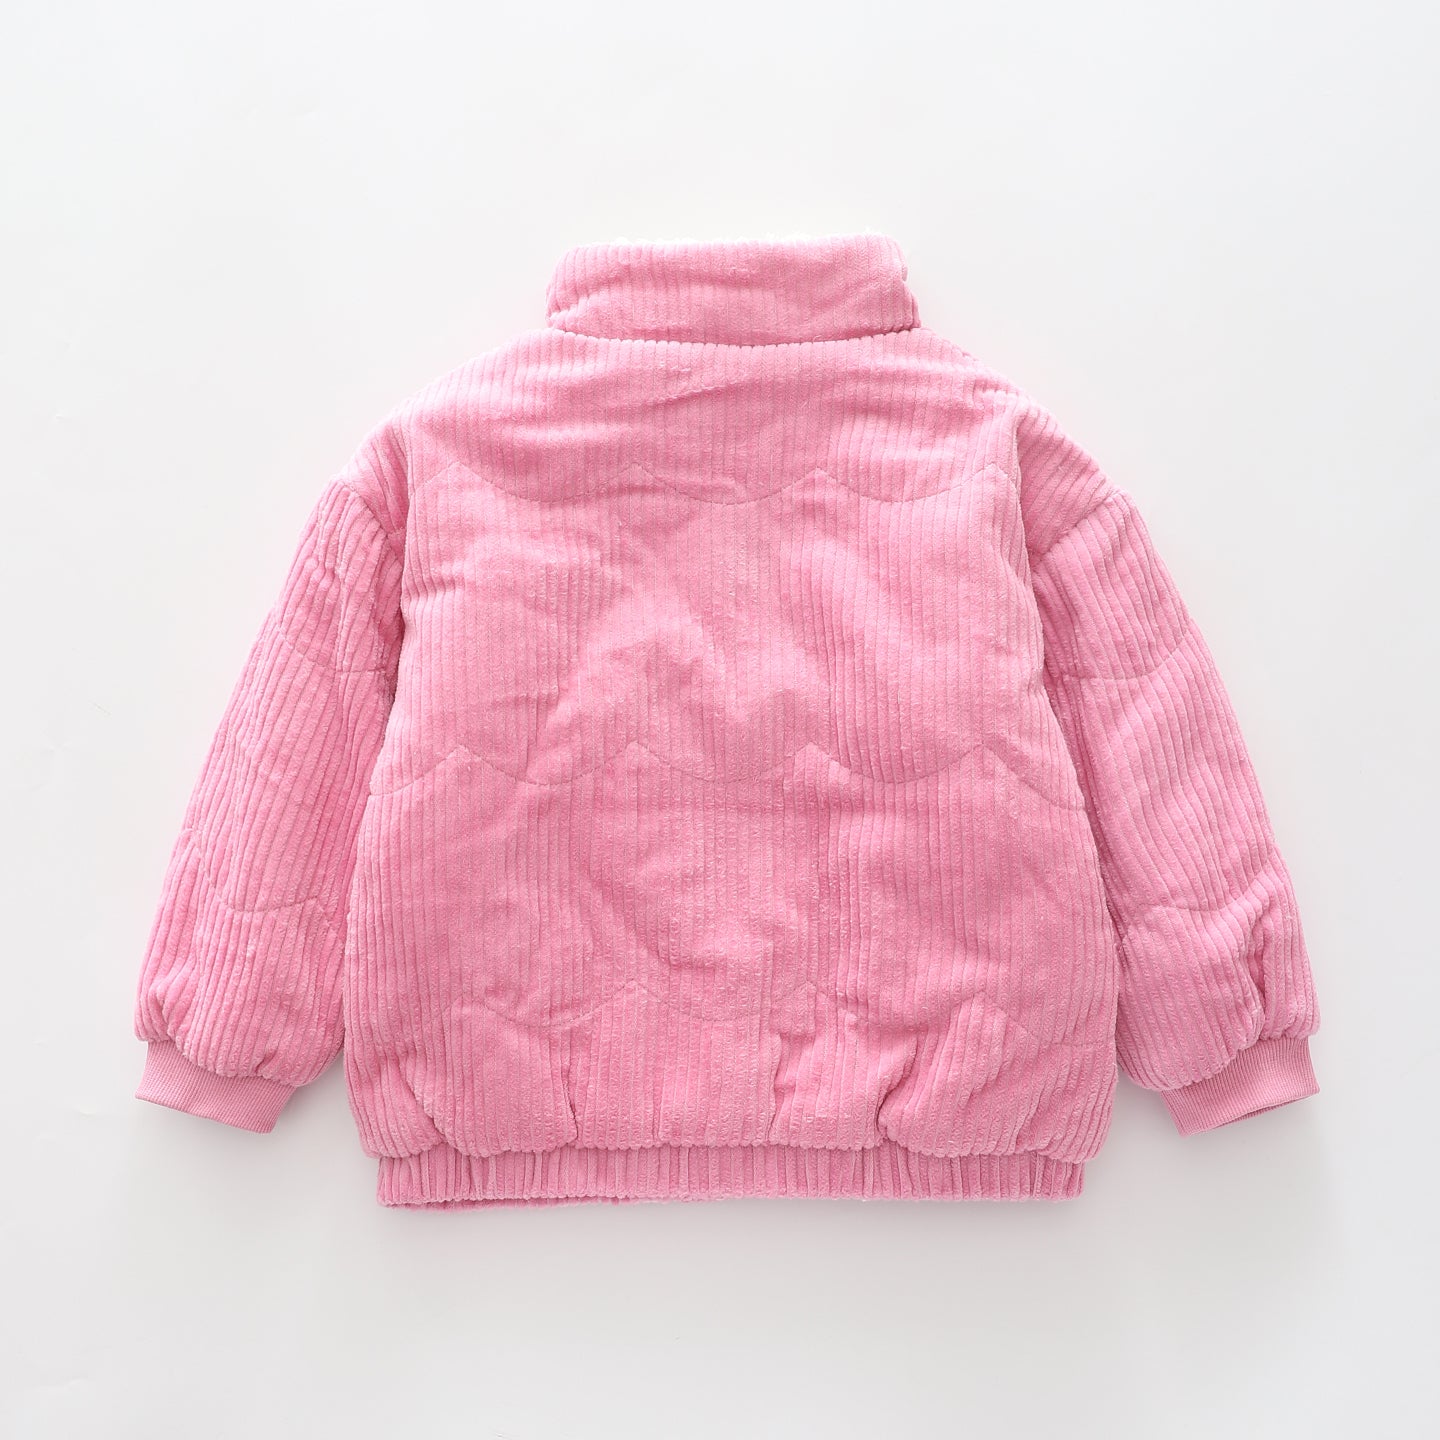 Pink Corduroy, Junior Girls Jacket